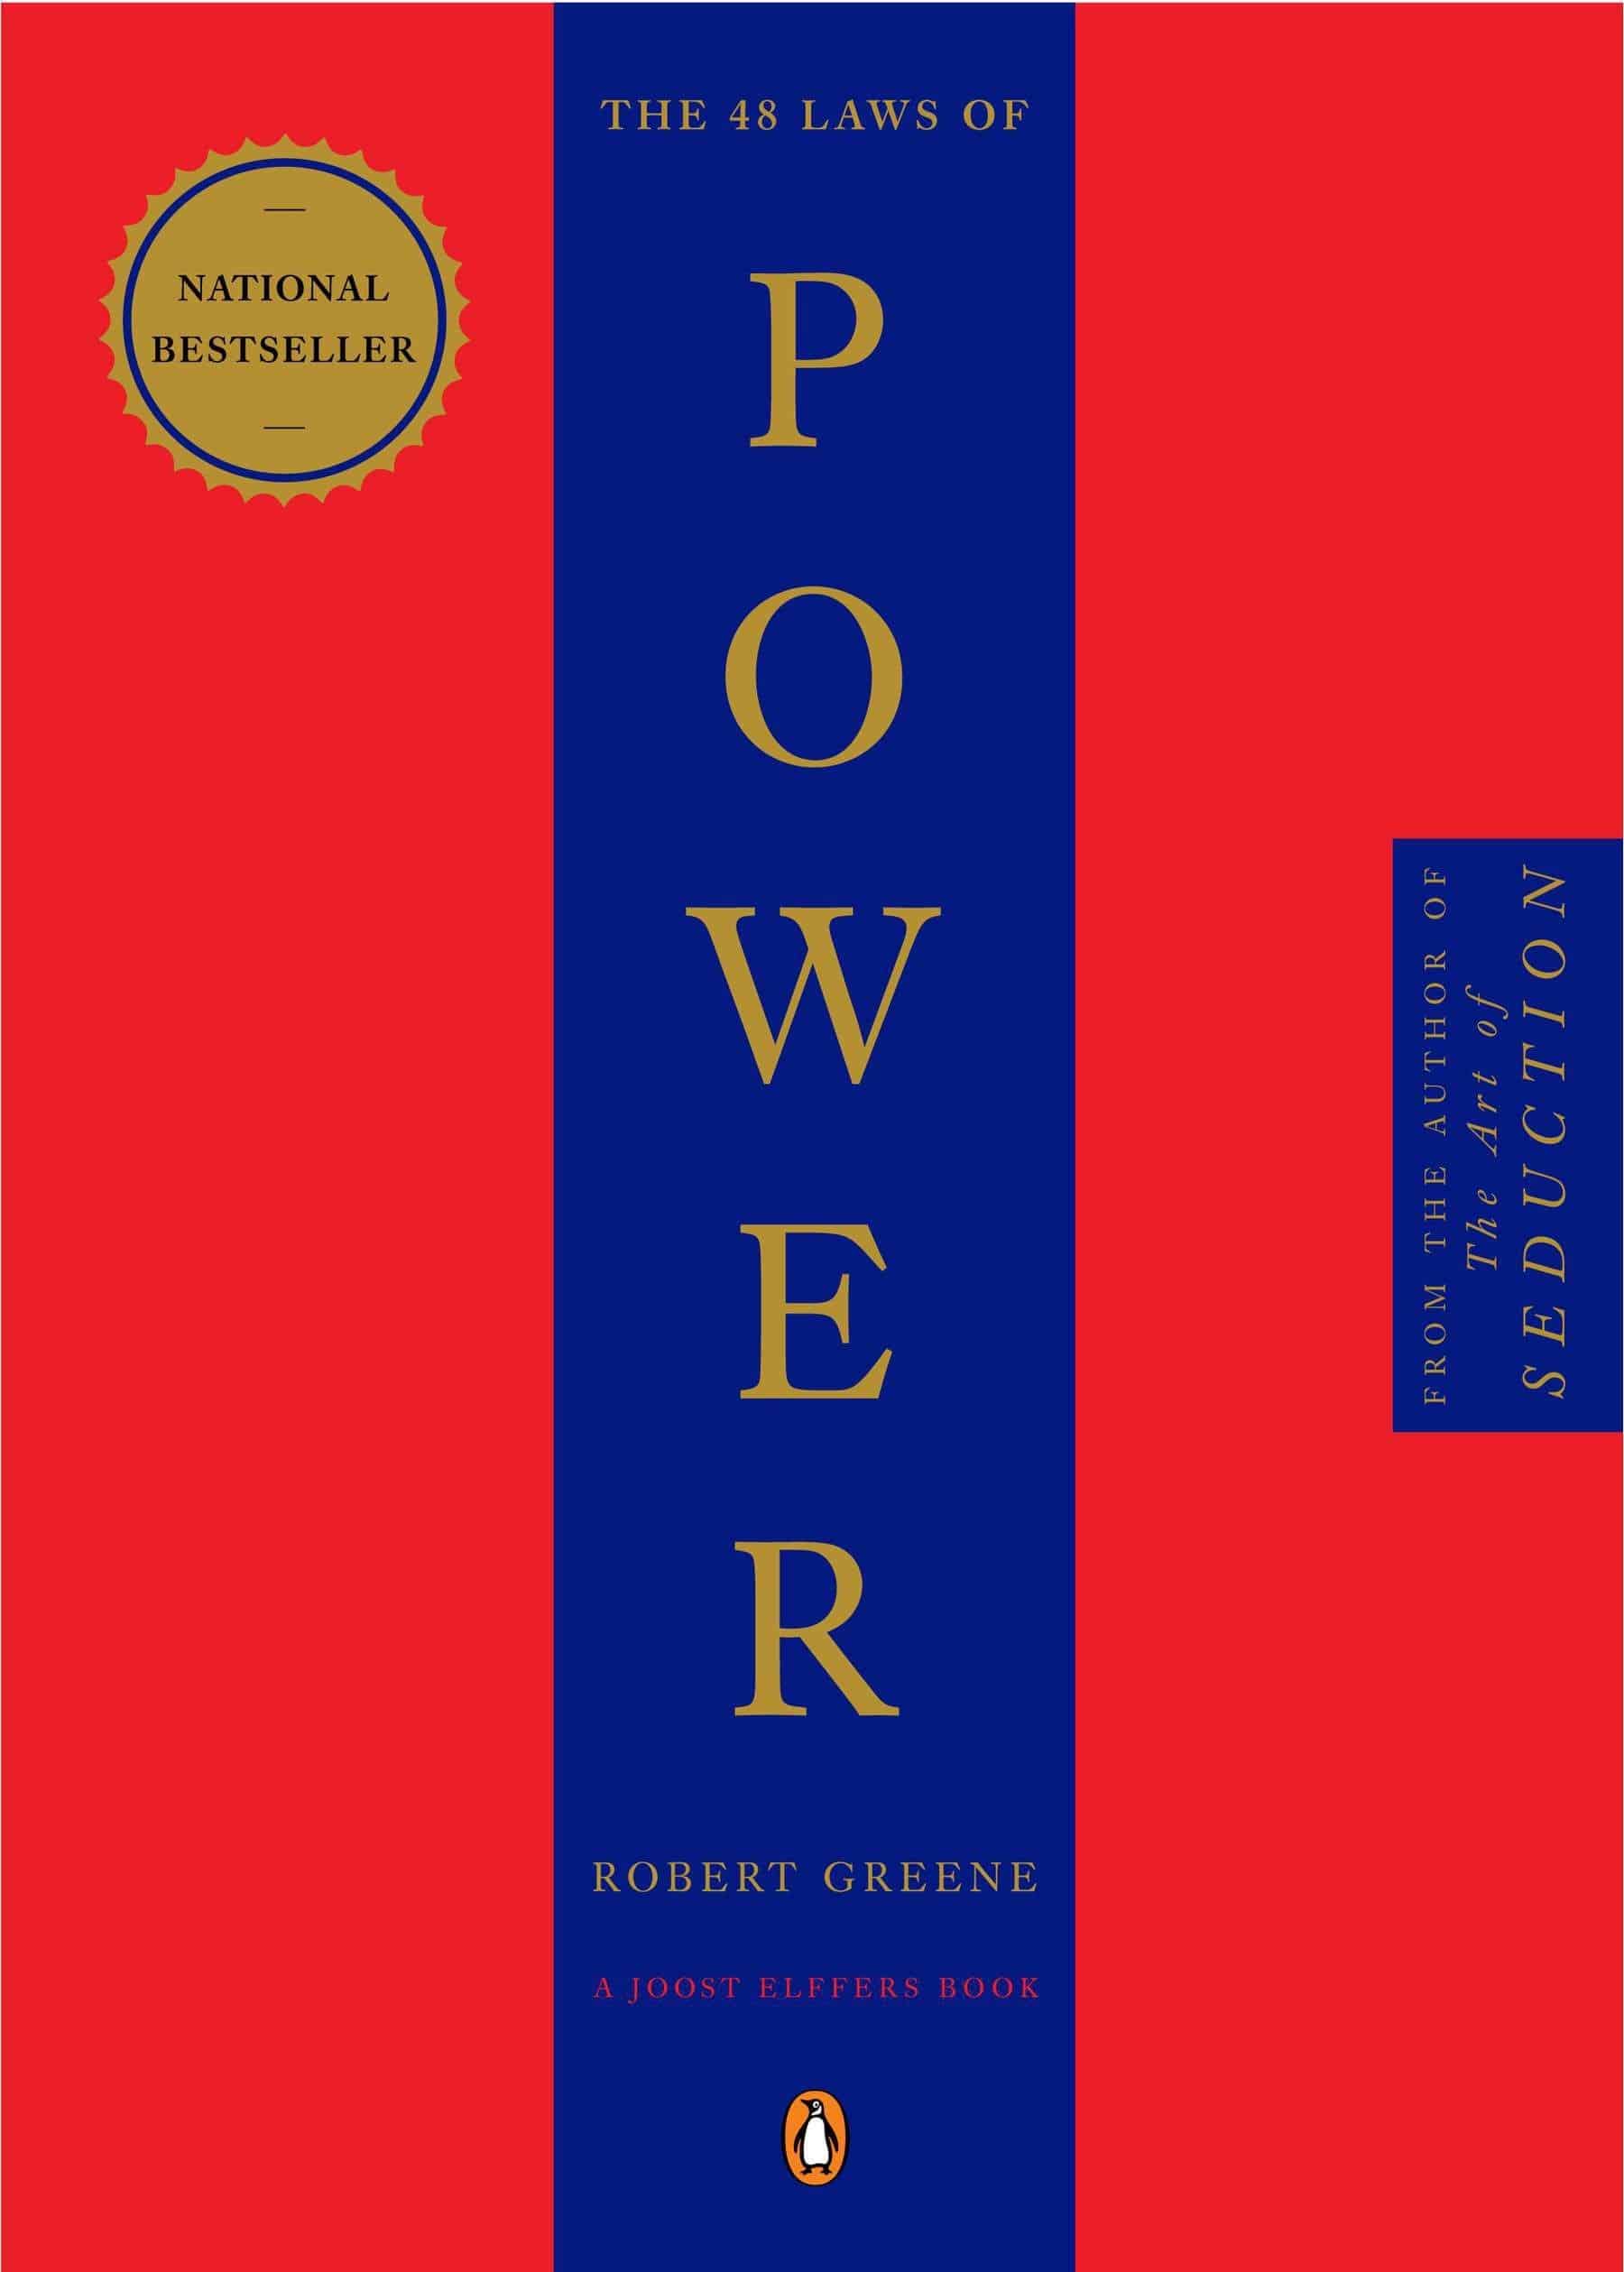 Best Self Development Book - The 48 Laws of Power by Robert Greene